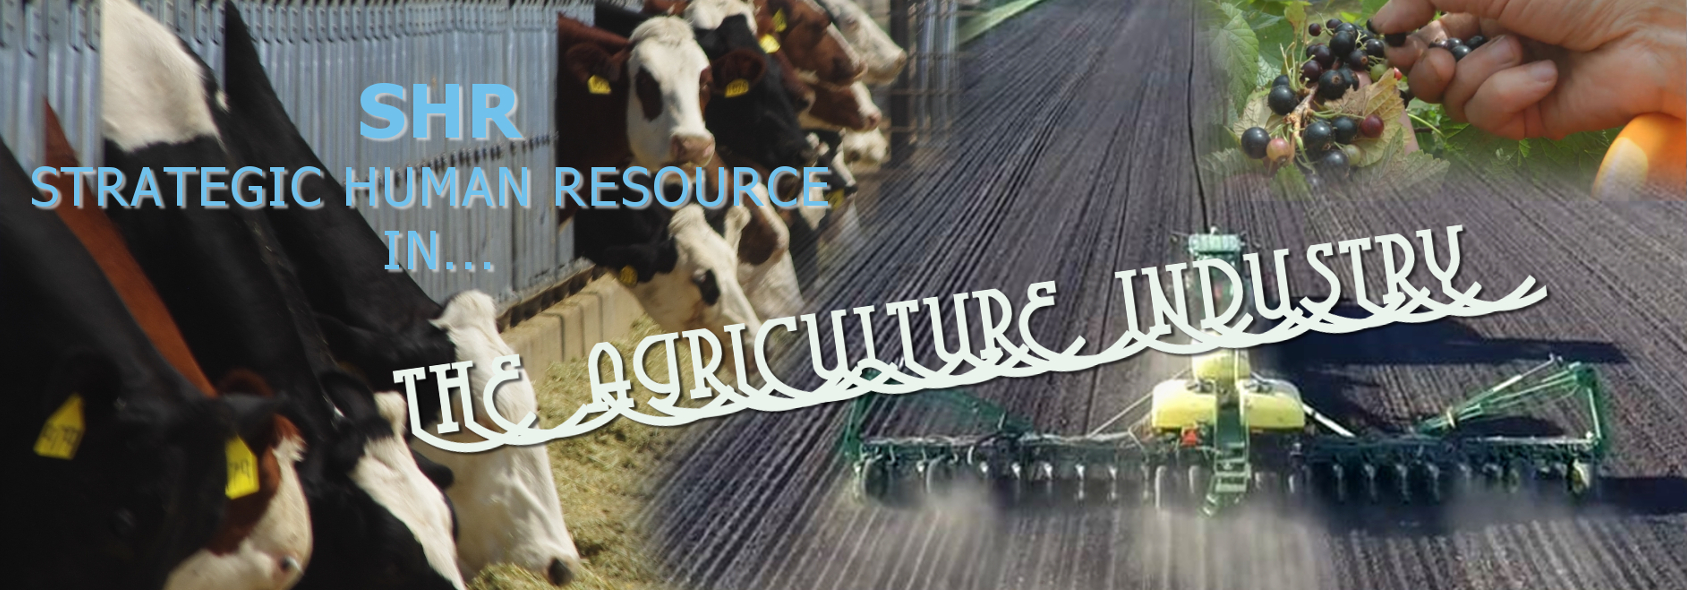 SHR Strategic Human Resource Careers Jobs inAgriculture